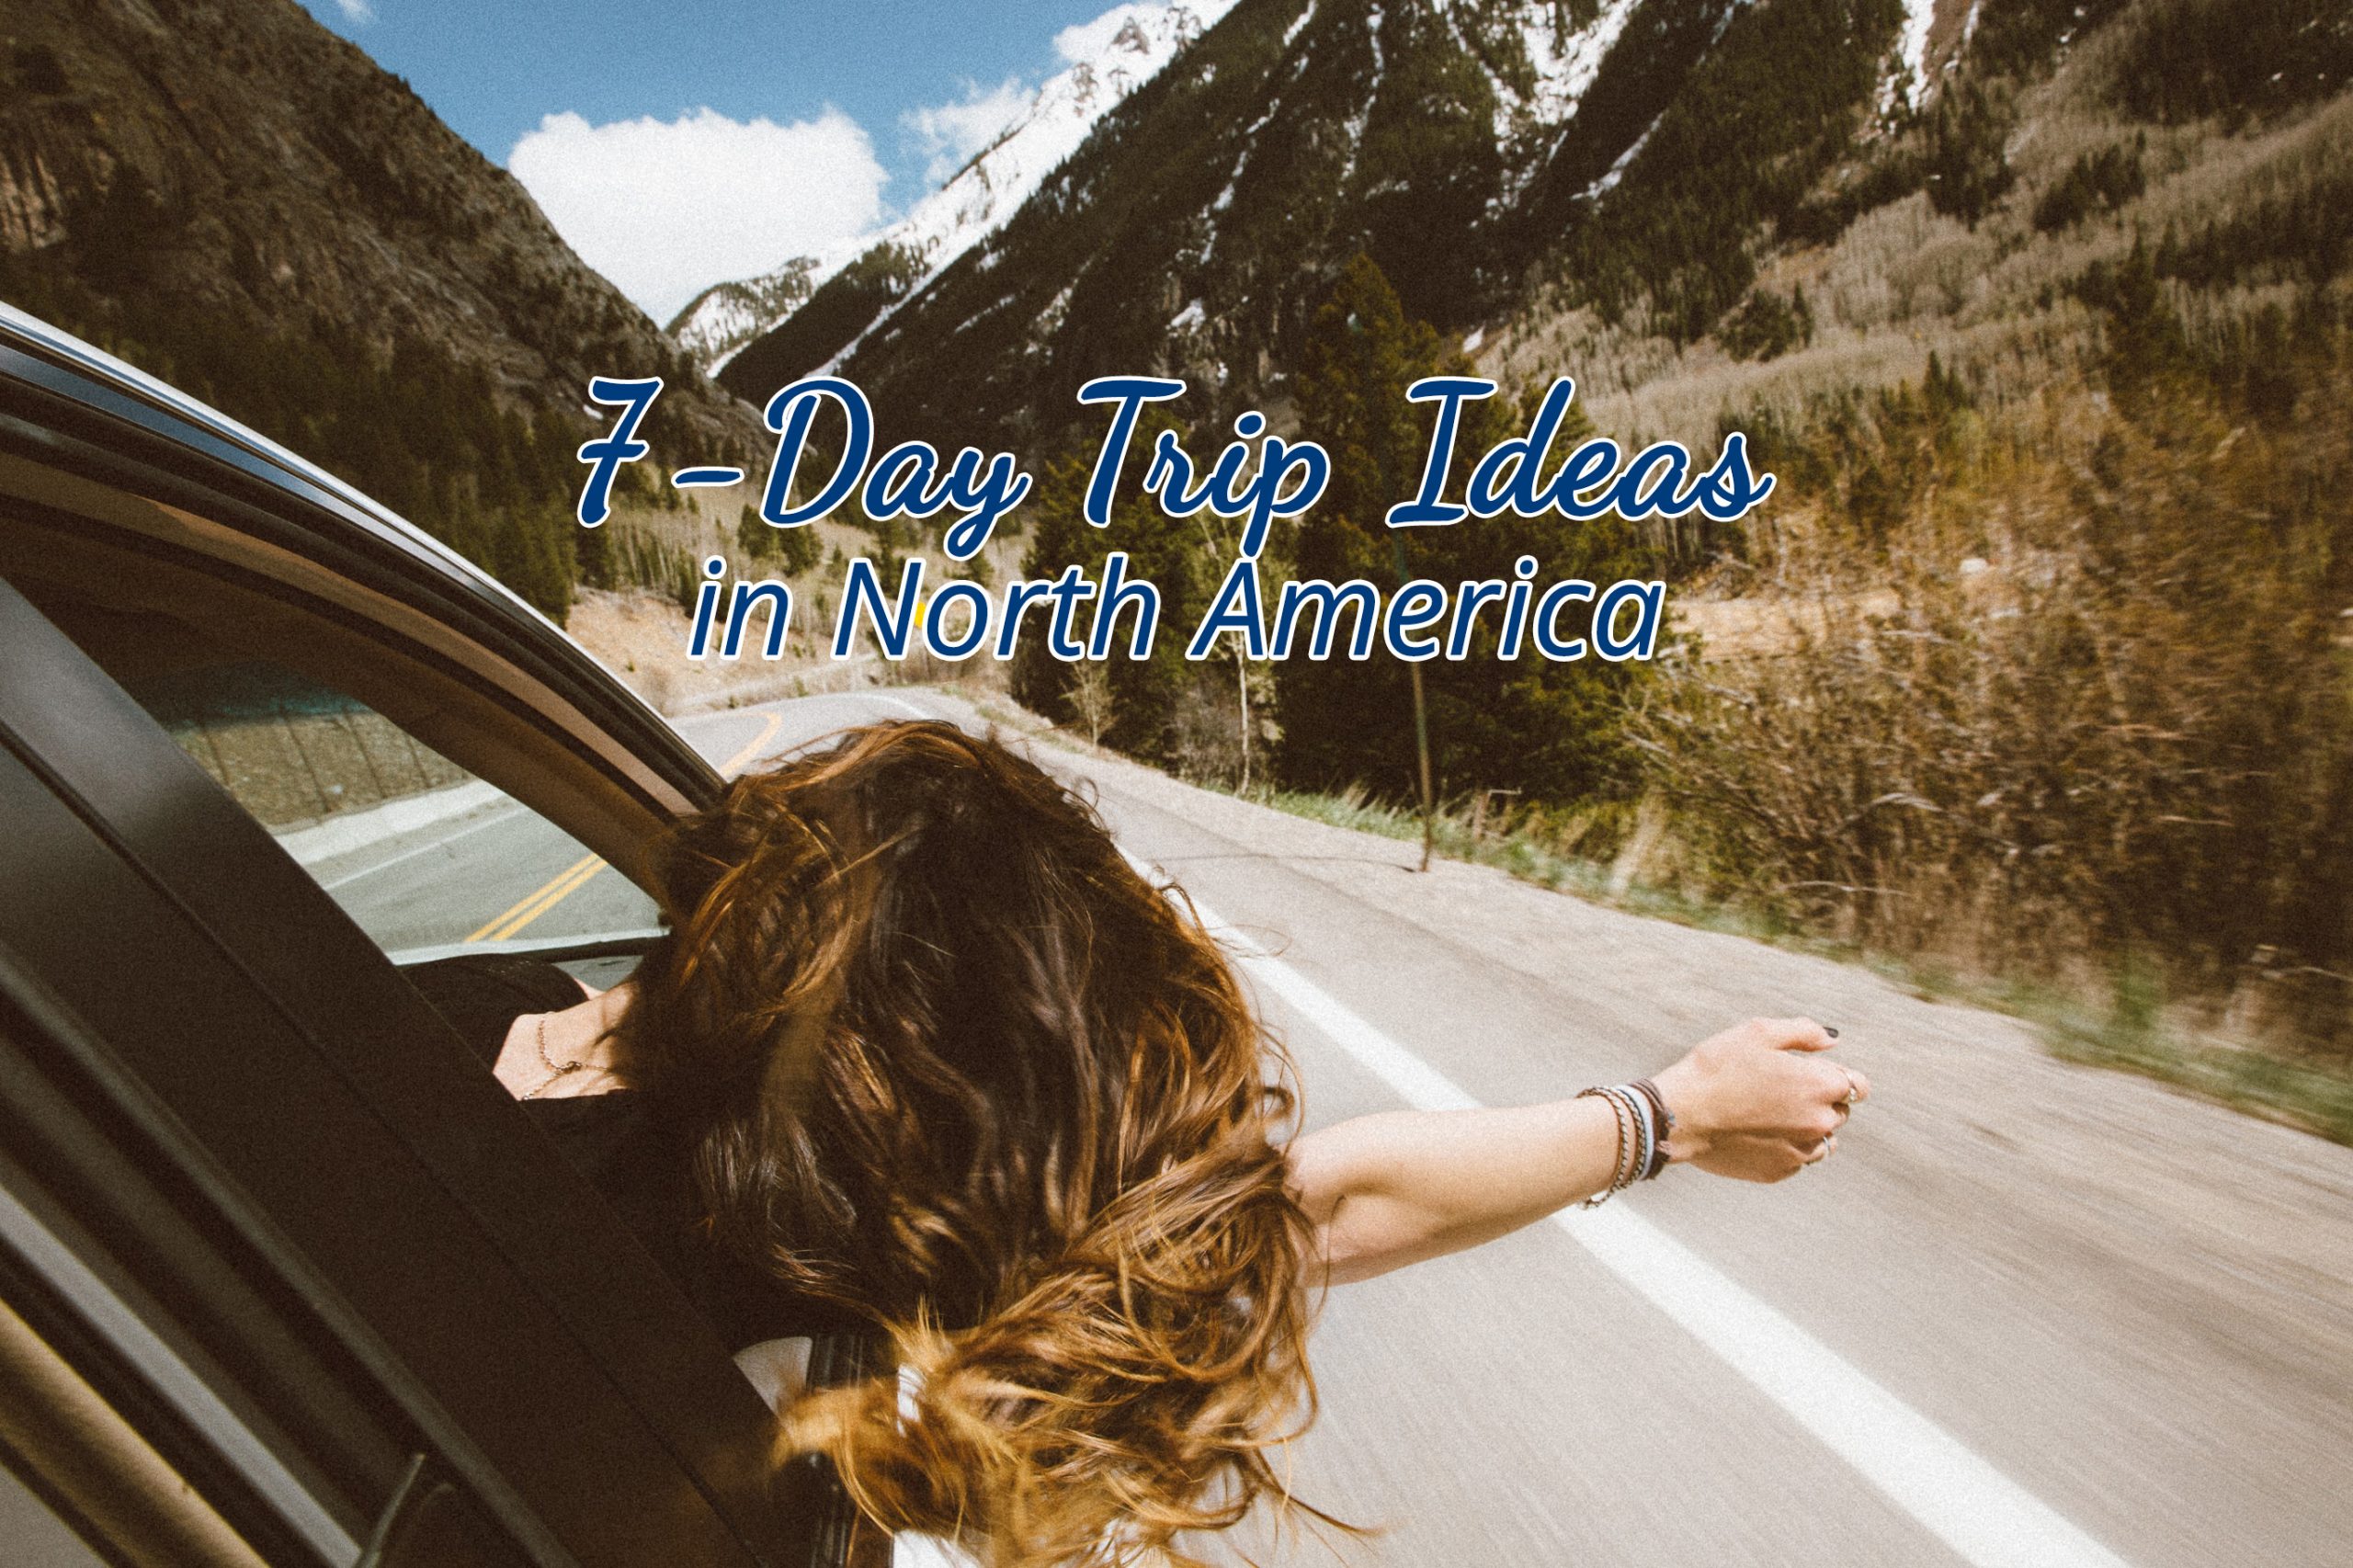 7-Day Trip Ideas in North America